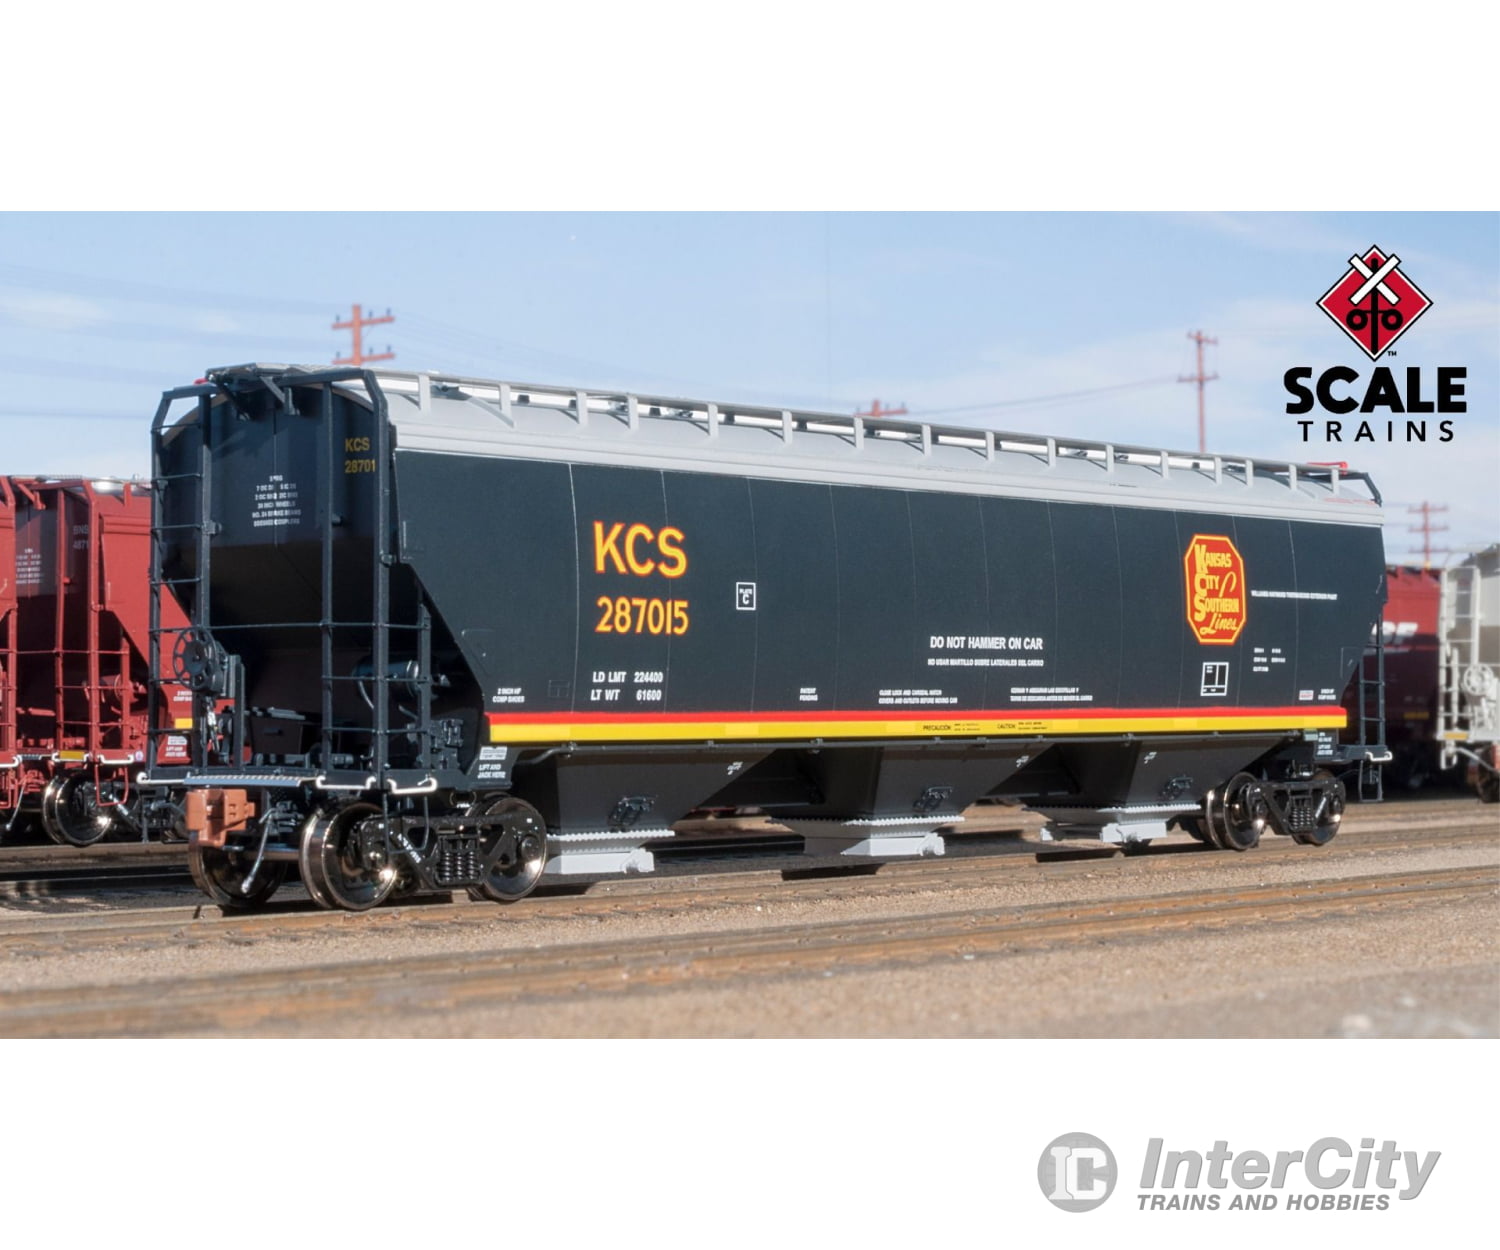 Scale Trains Sxt30821 Rivet Counter Ho Gunderson Covered Hopper Kansas City Southern - Belle Rd# Kcs